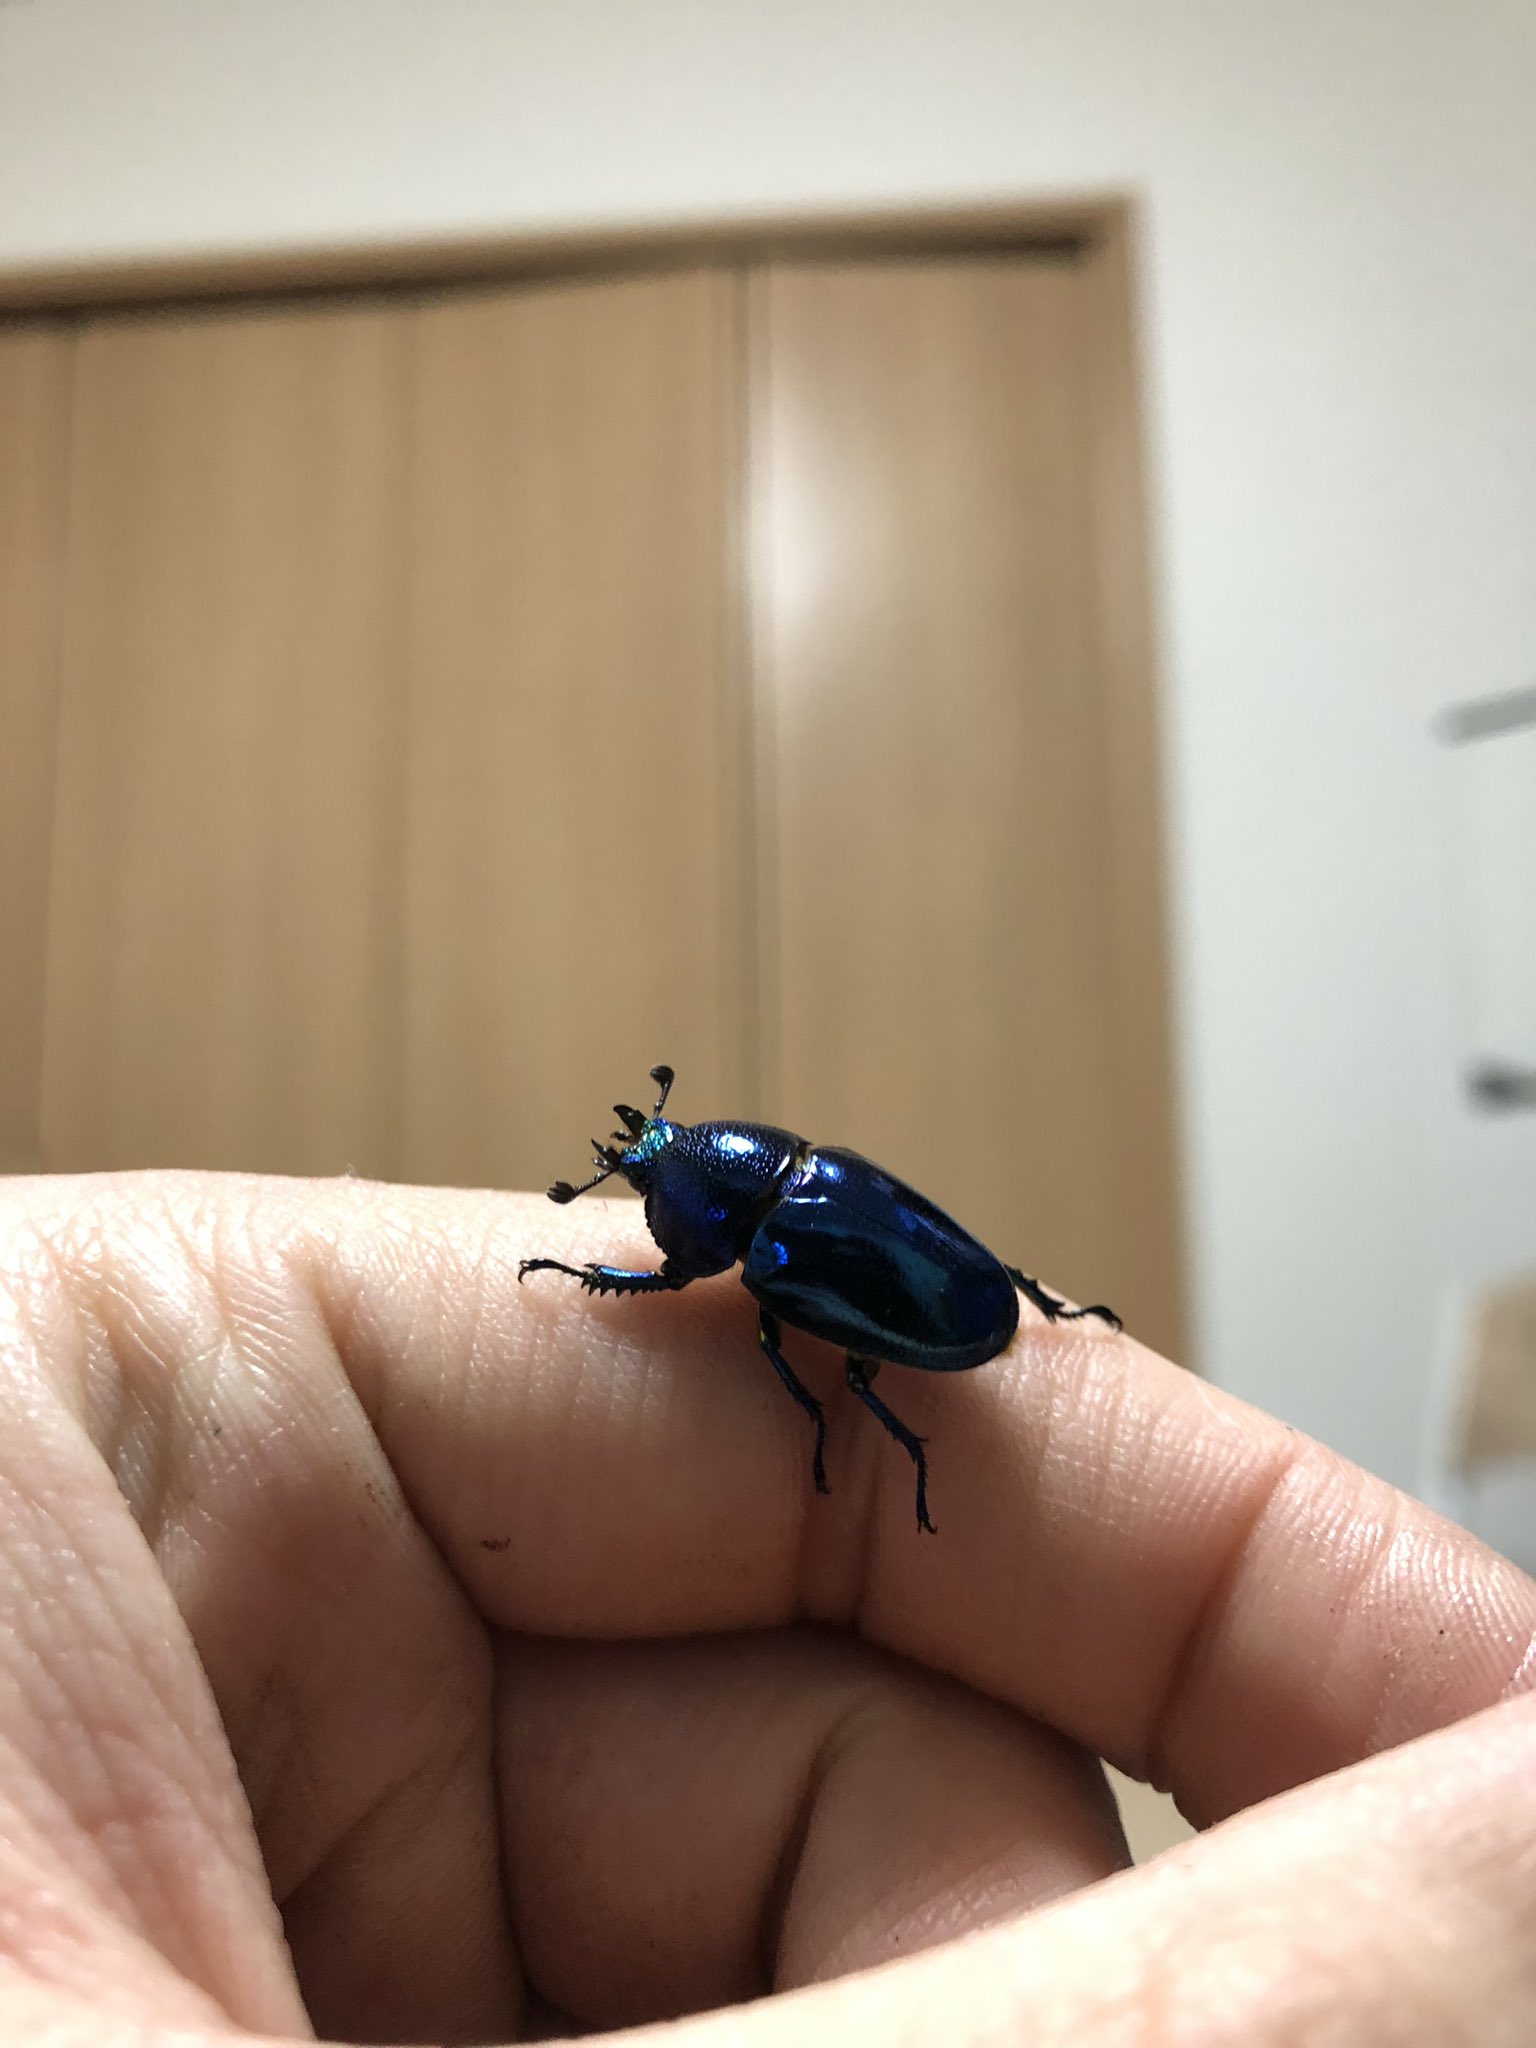 Cool Bugs Pnwbugs Twitter